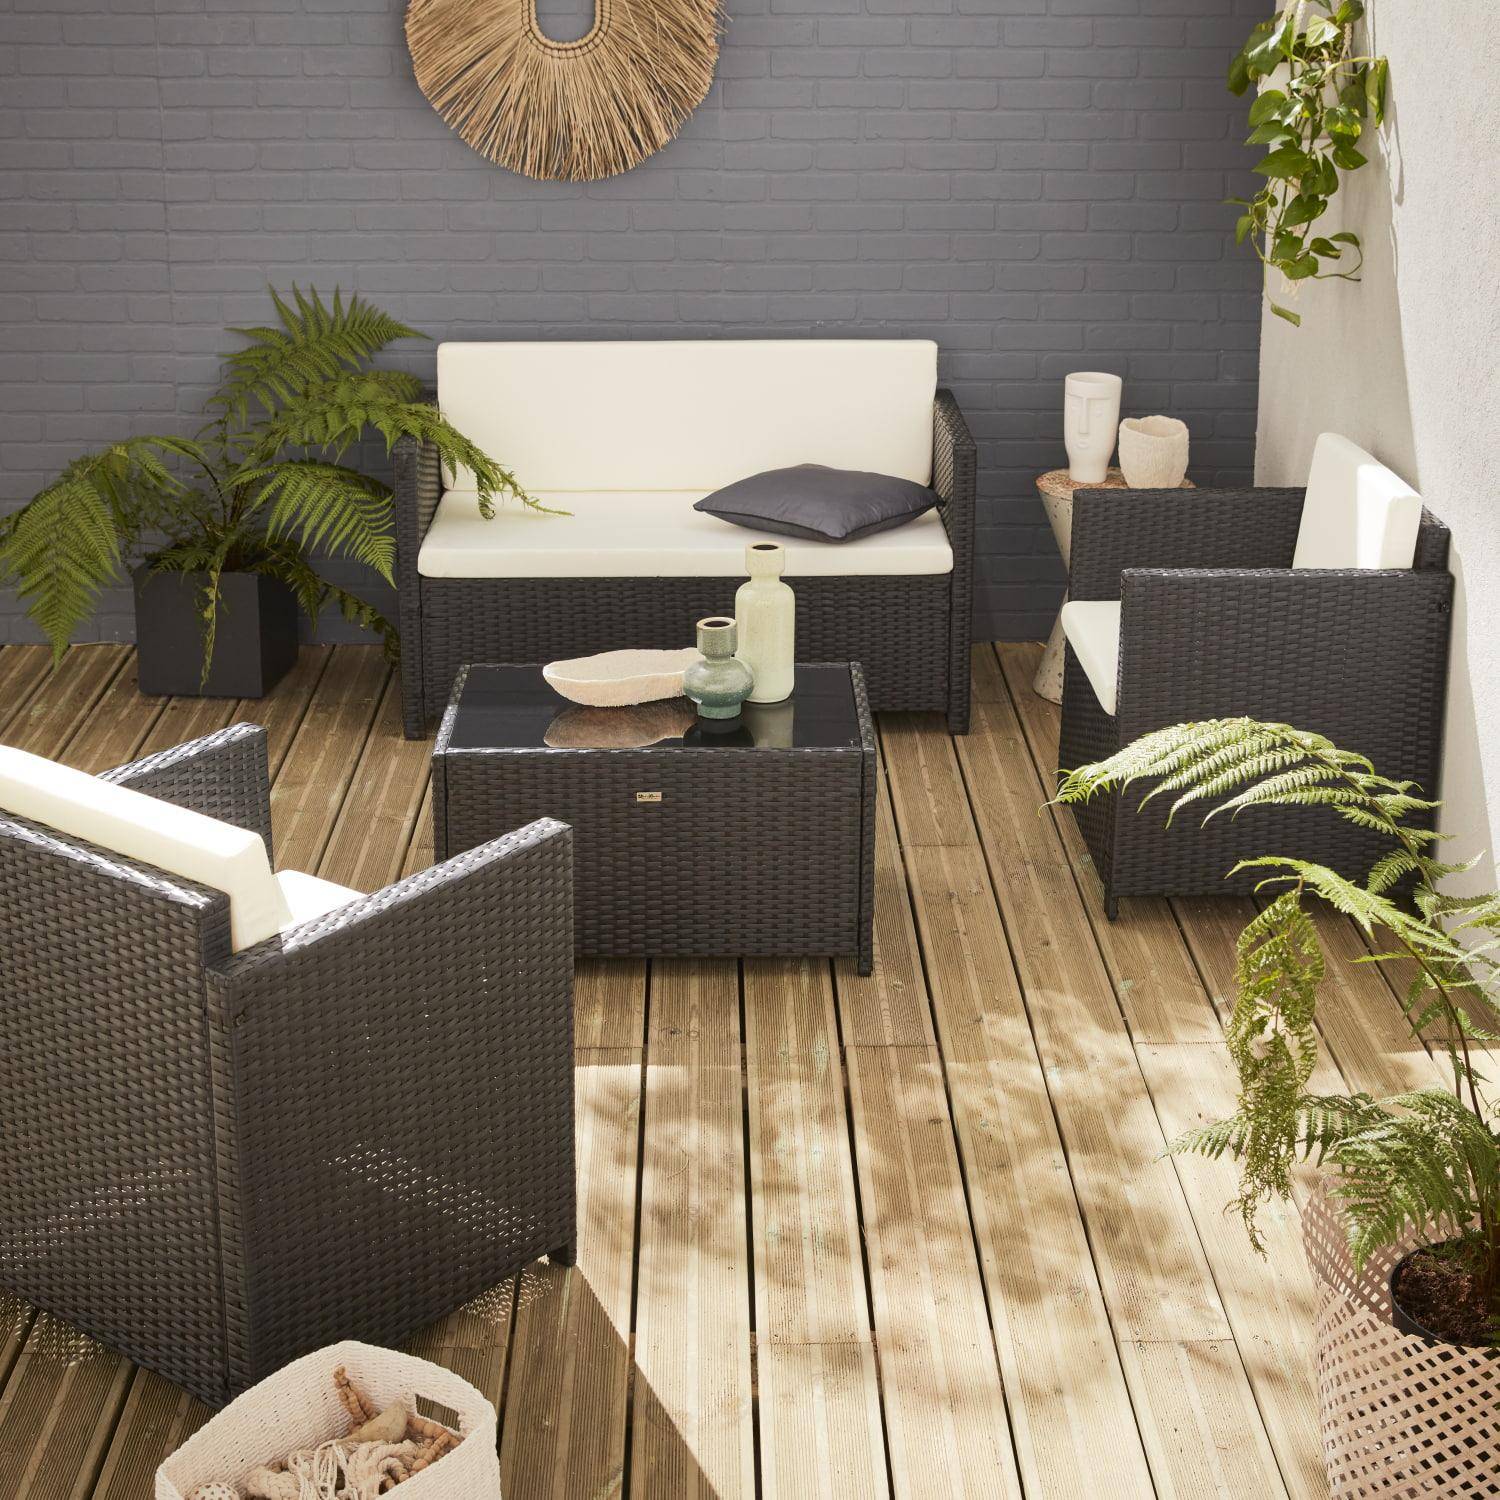 Muebles de jardín, conjunto sofá de exterior, Negro crudo, 4 plazas, rattan sintético, resina trenzada - Perugia Photo1